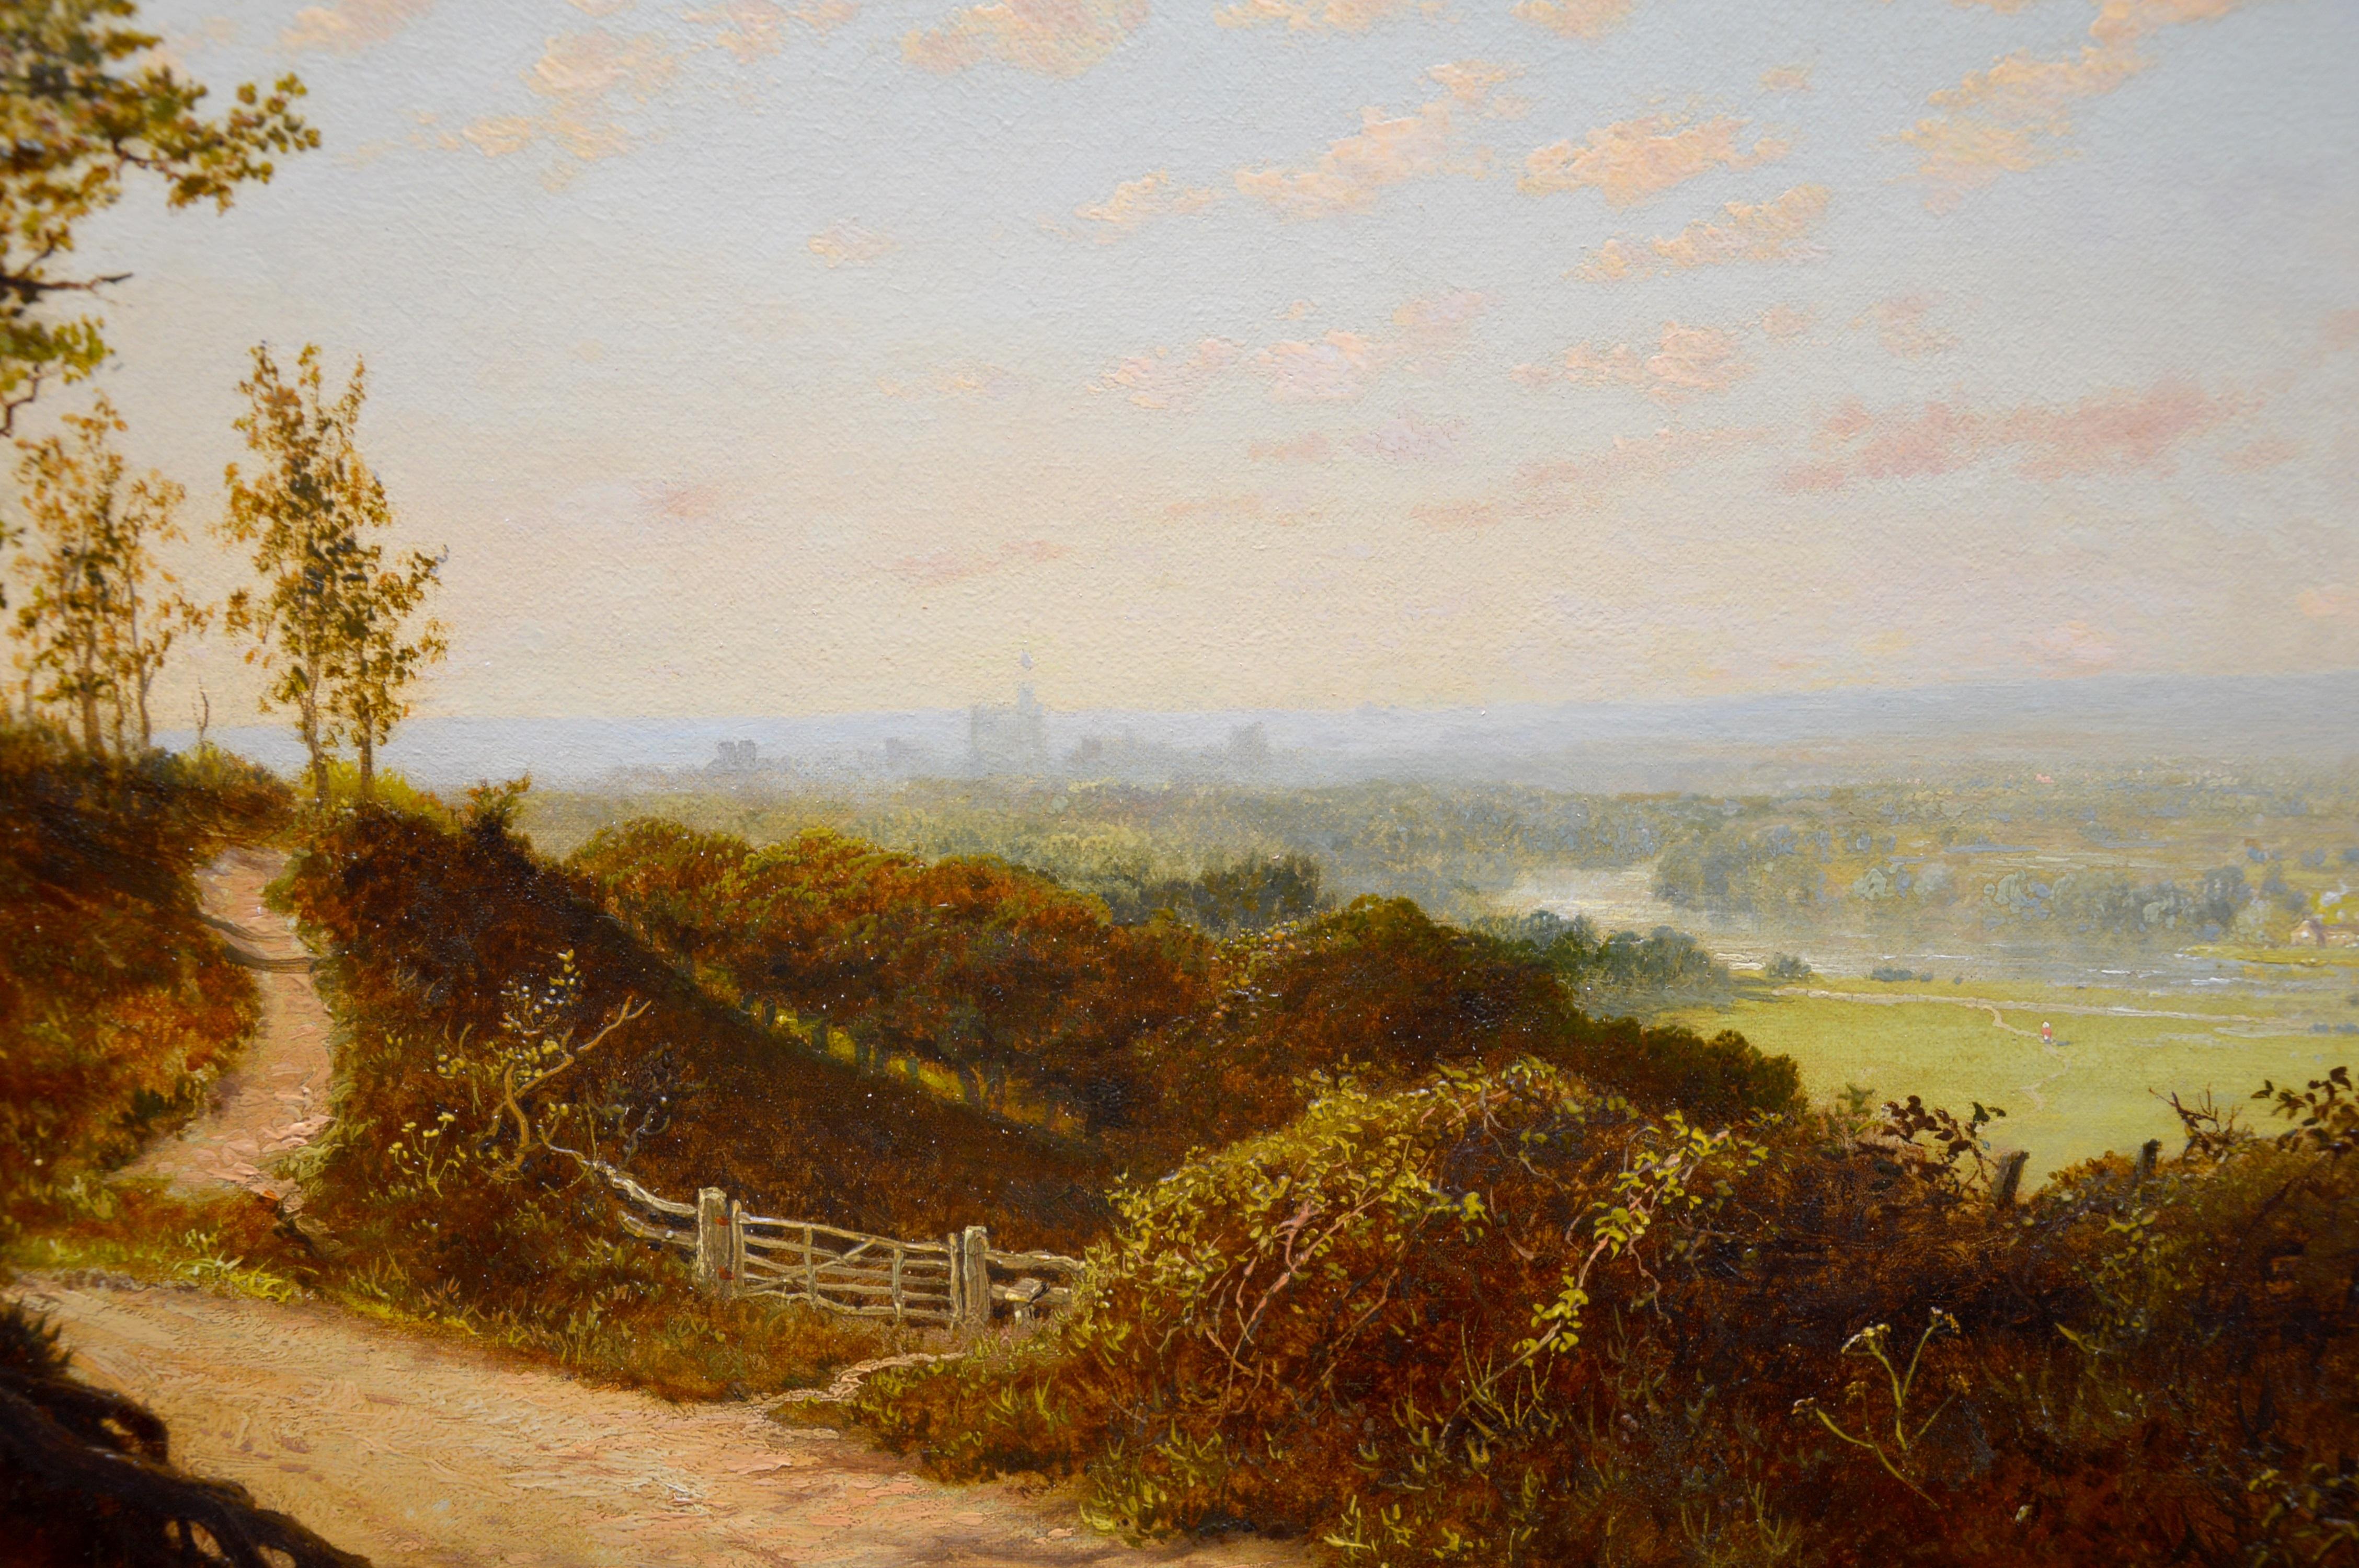 River Thames near Windsor - 19th Century Landscape Oil Painting of Royal Castle 3